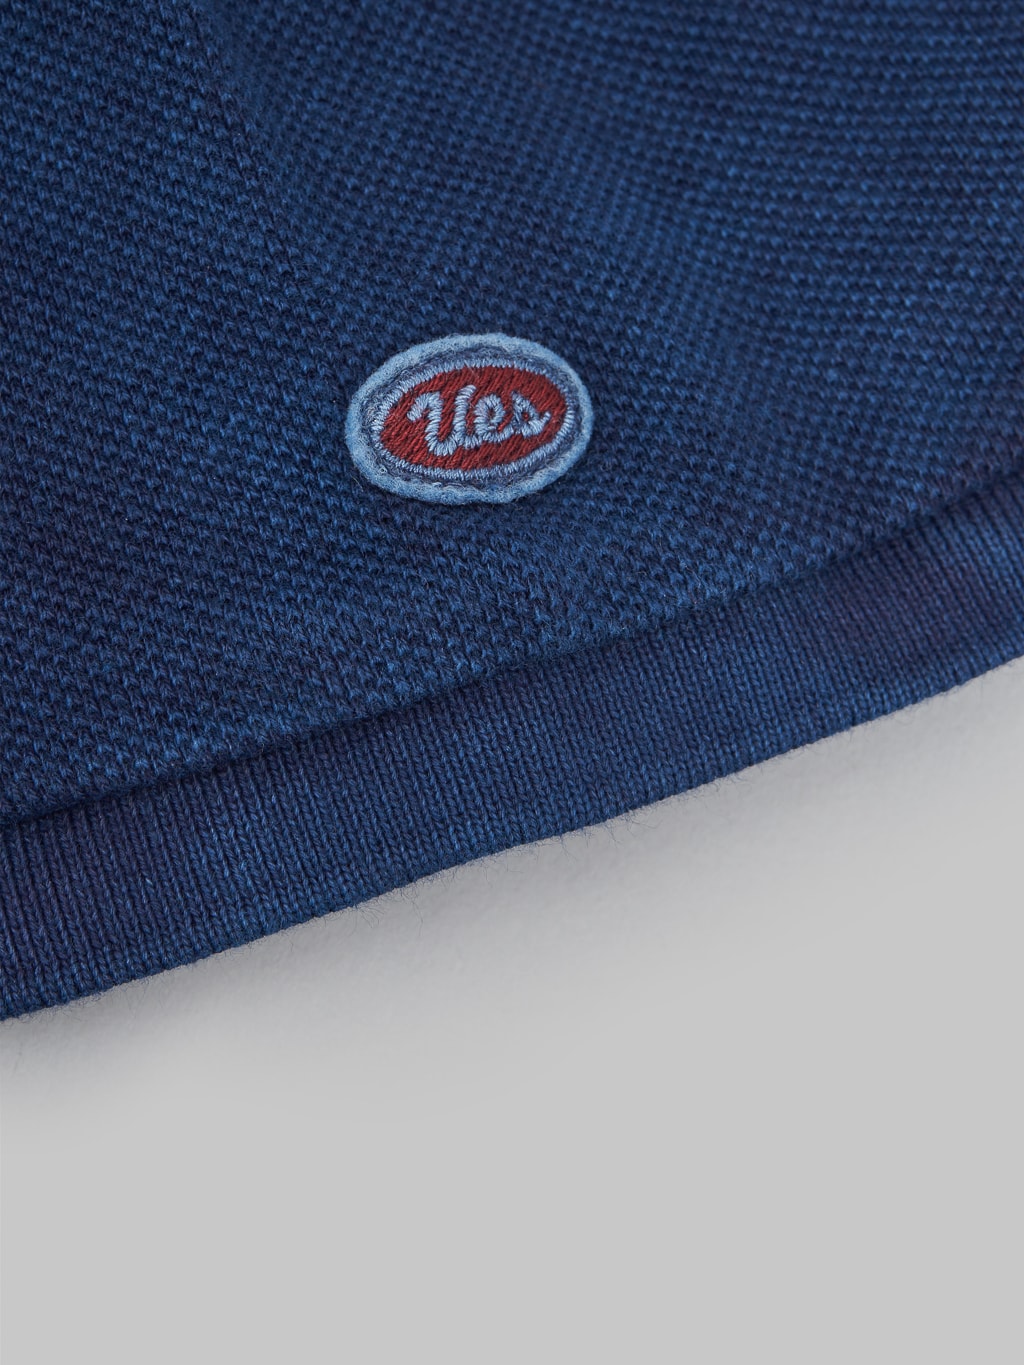 ues polo shirt indigo opening brand logo